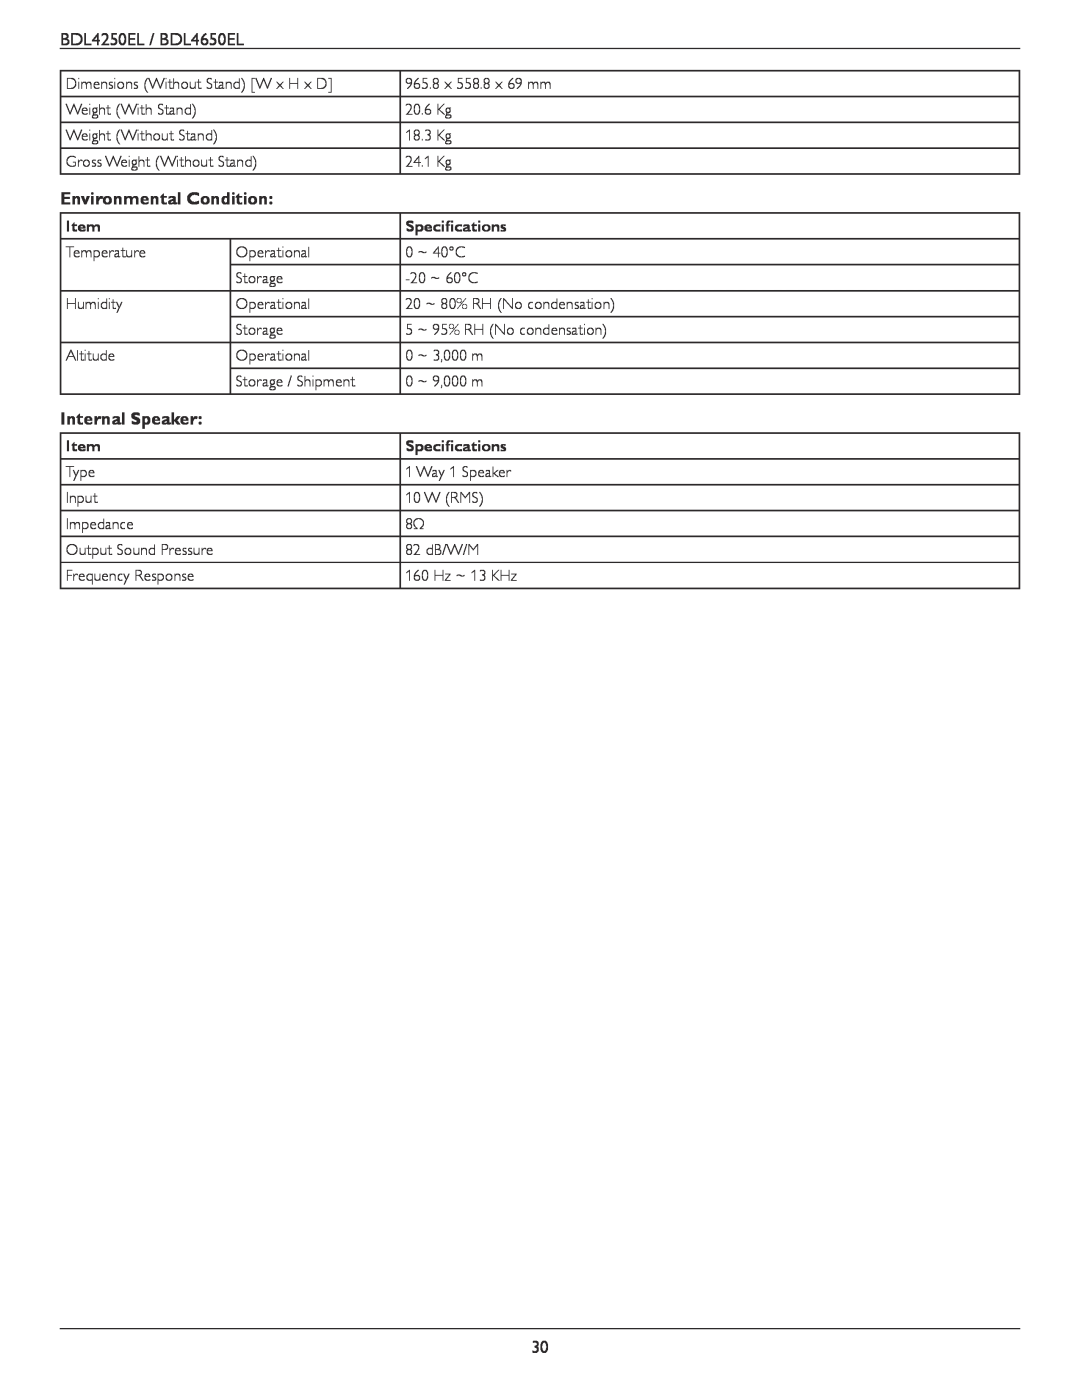 Philips user manual BDL4250EL / BDL4650EL, Environmental Condition, Internal Speaker 